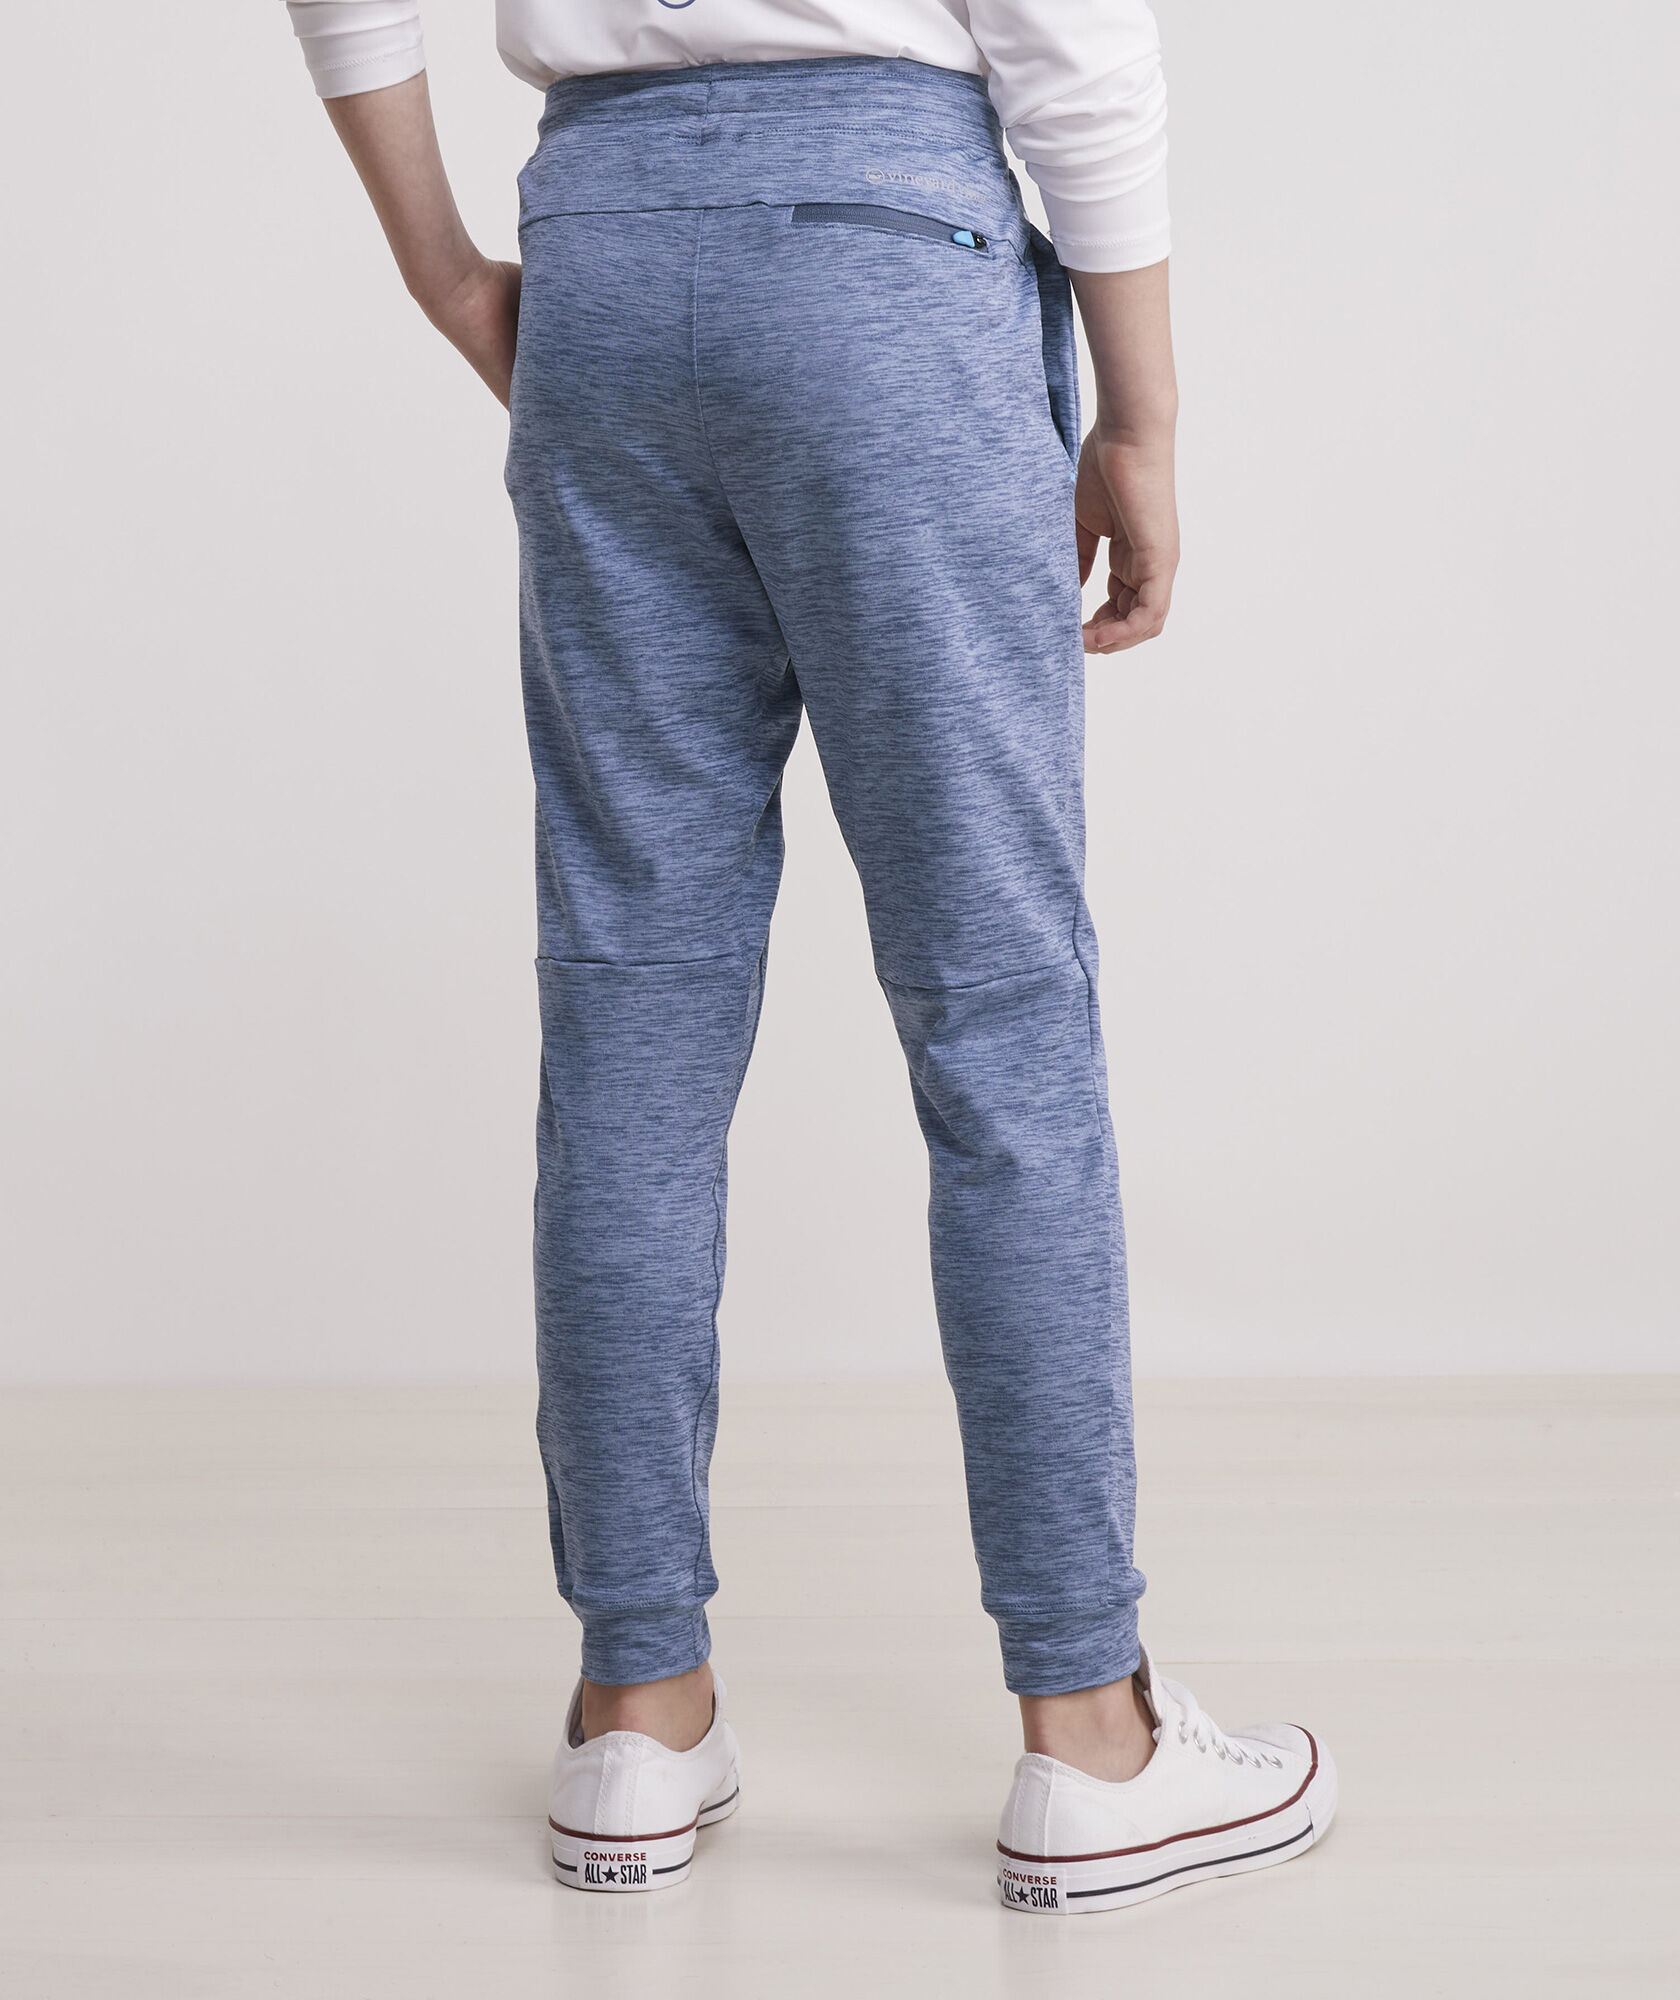 Starter Track Pants Boys Large 28 x 26 Gray Sport Sweatpants Polyester  Athletic | eBay